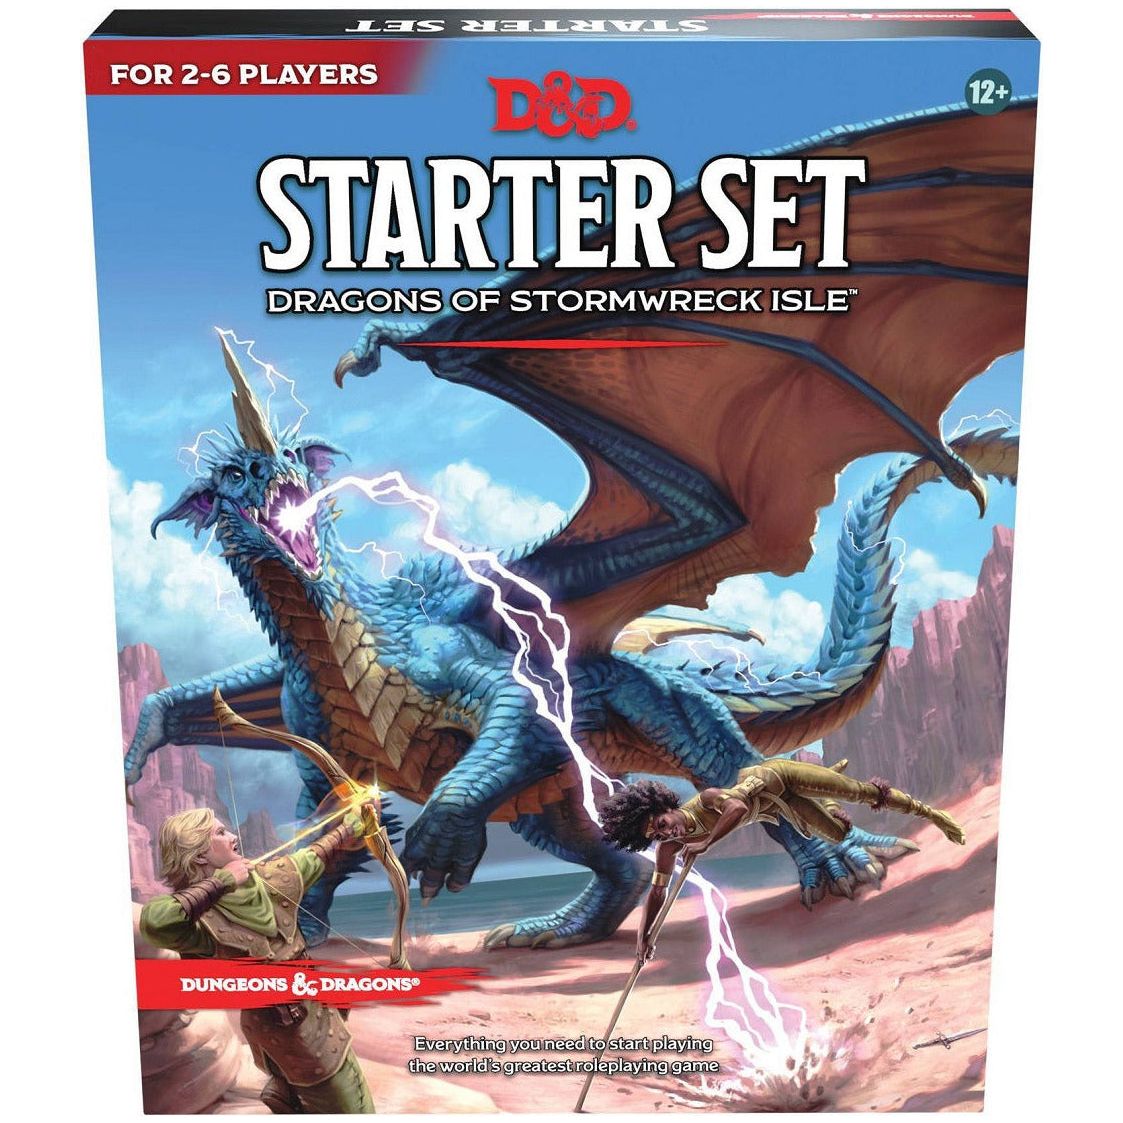 D&D Starter Set - Dragons of Stormwreck Isle - Box Set